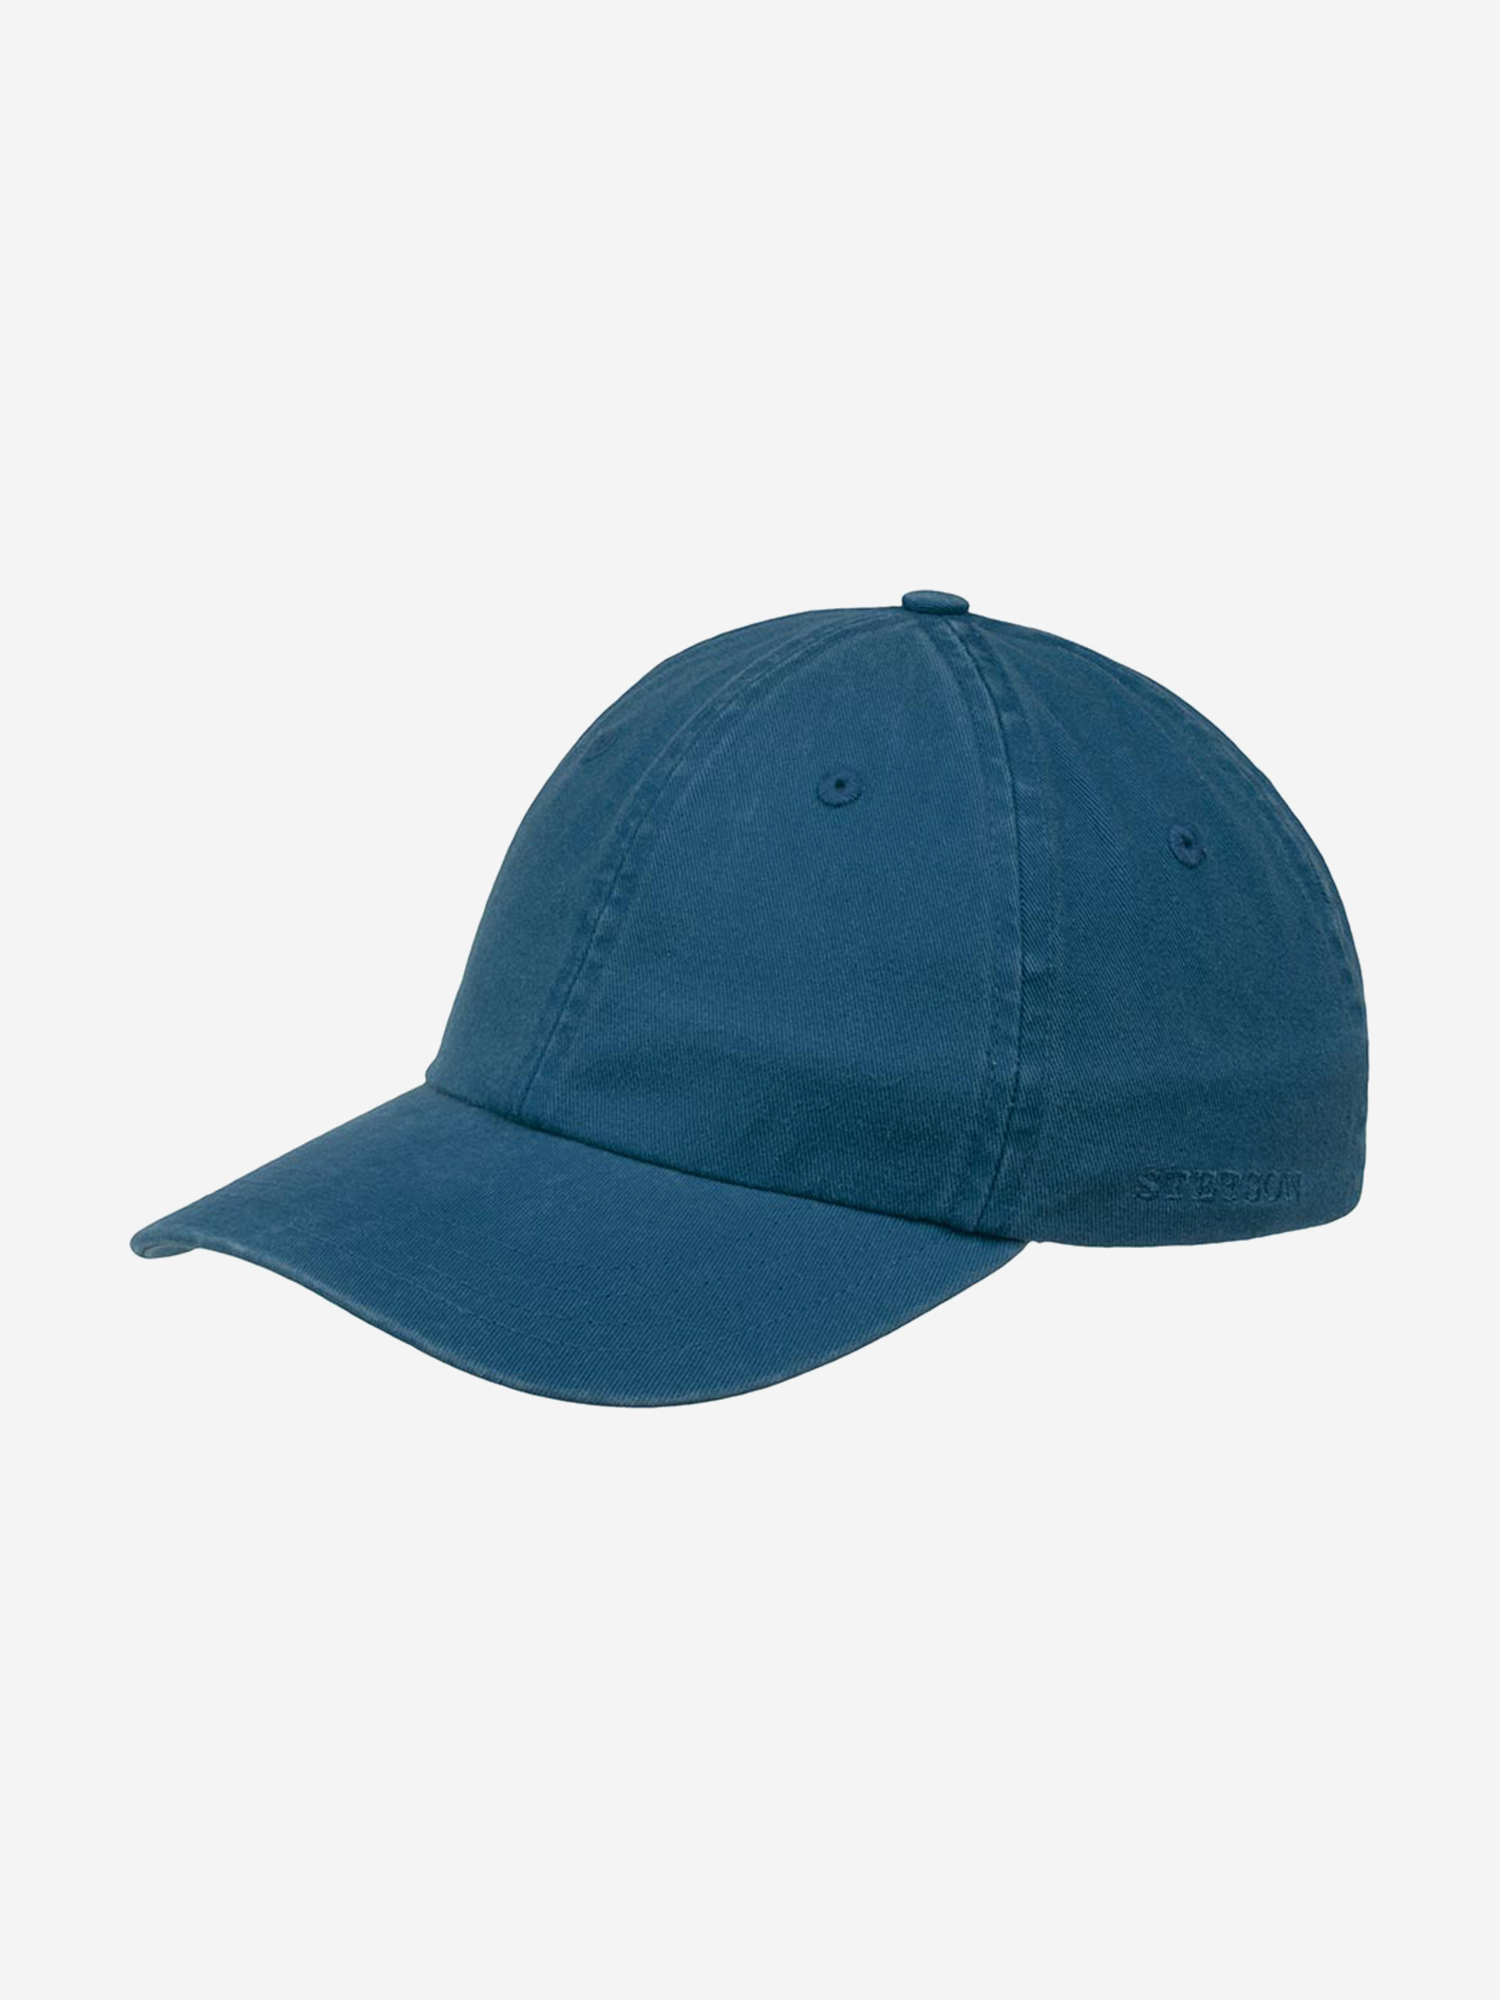 Бейсболка STETSON 7711101 BASEBALL CAP COTTON (синий), Синий